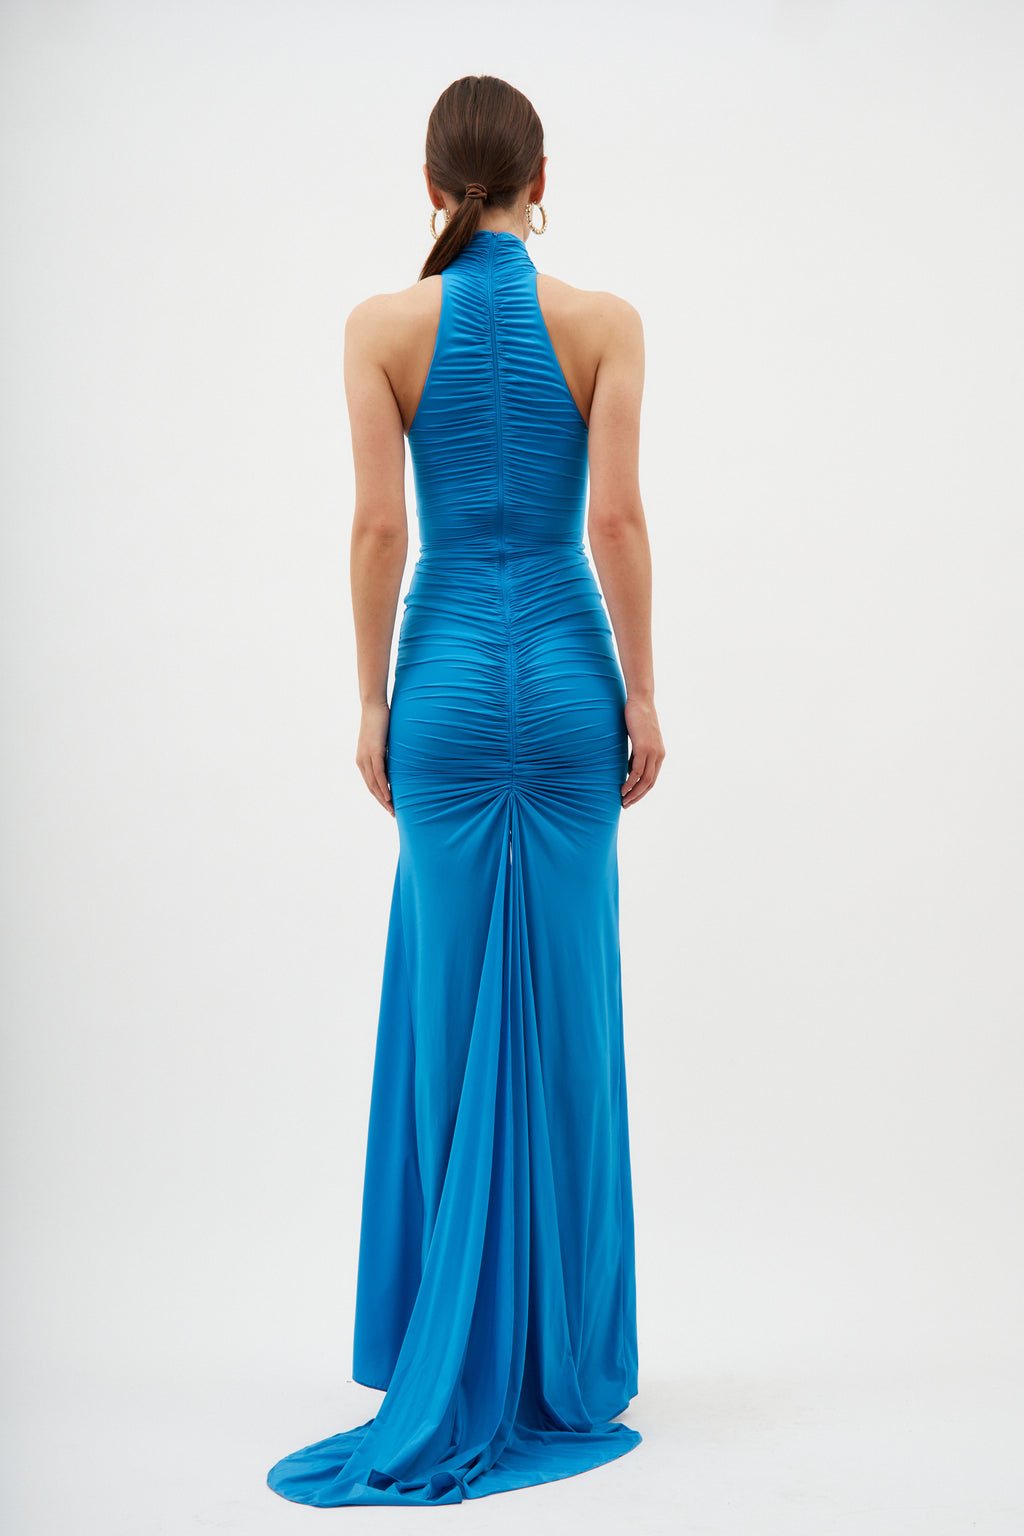 Lorne Blue Dress